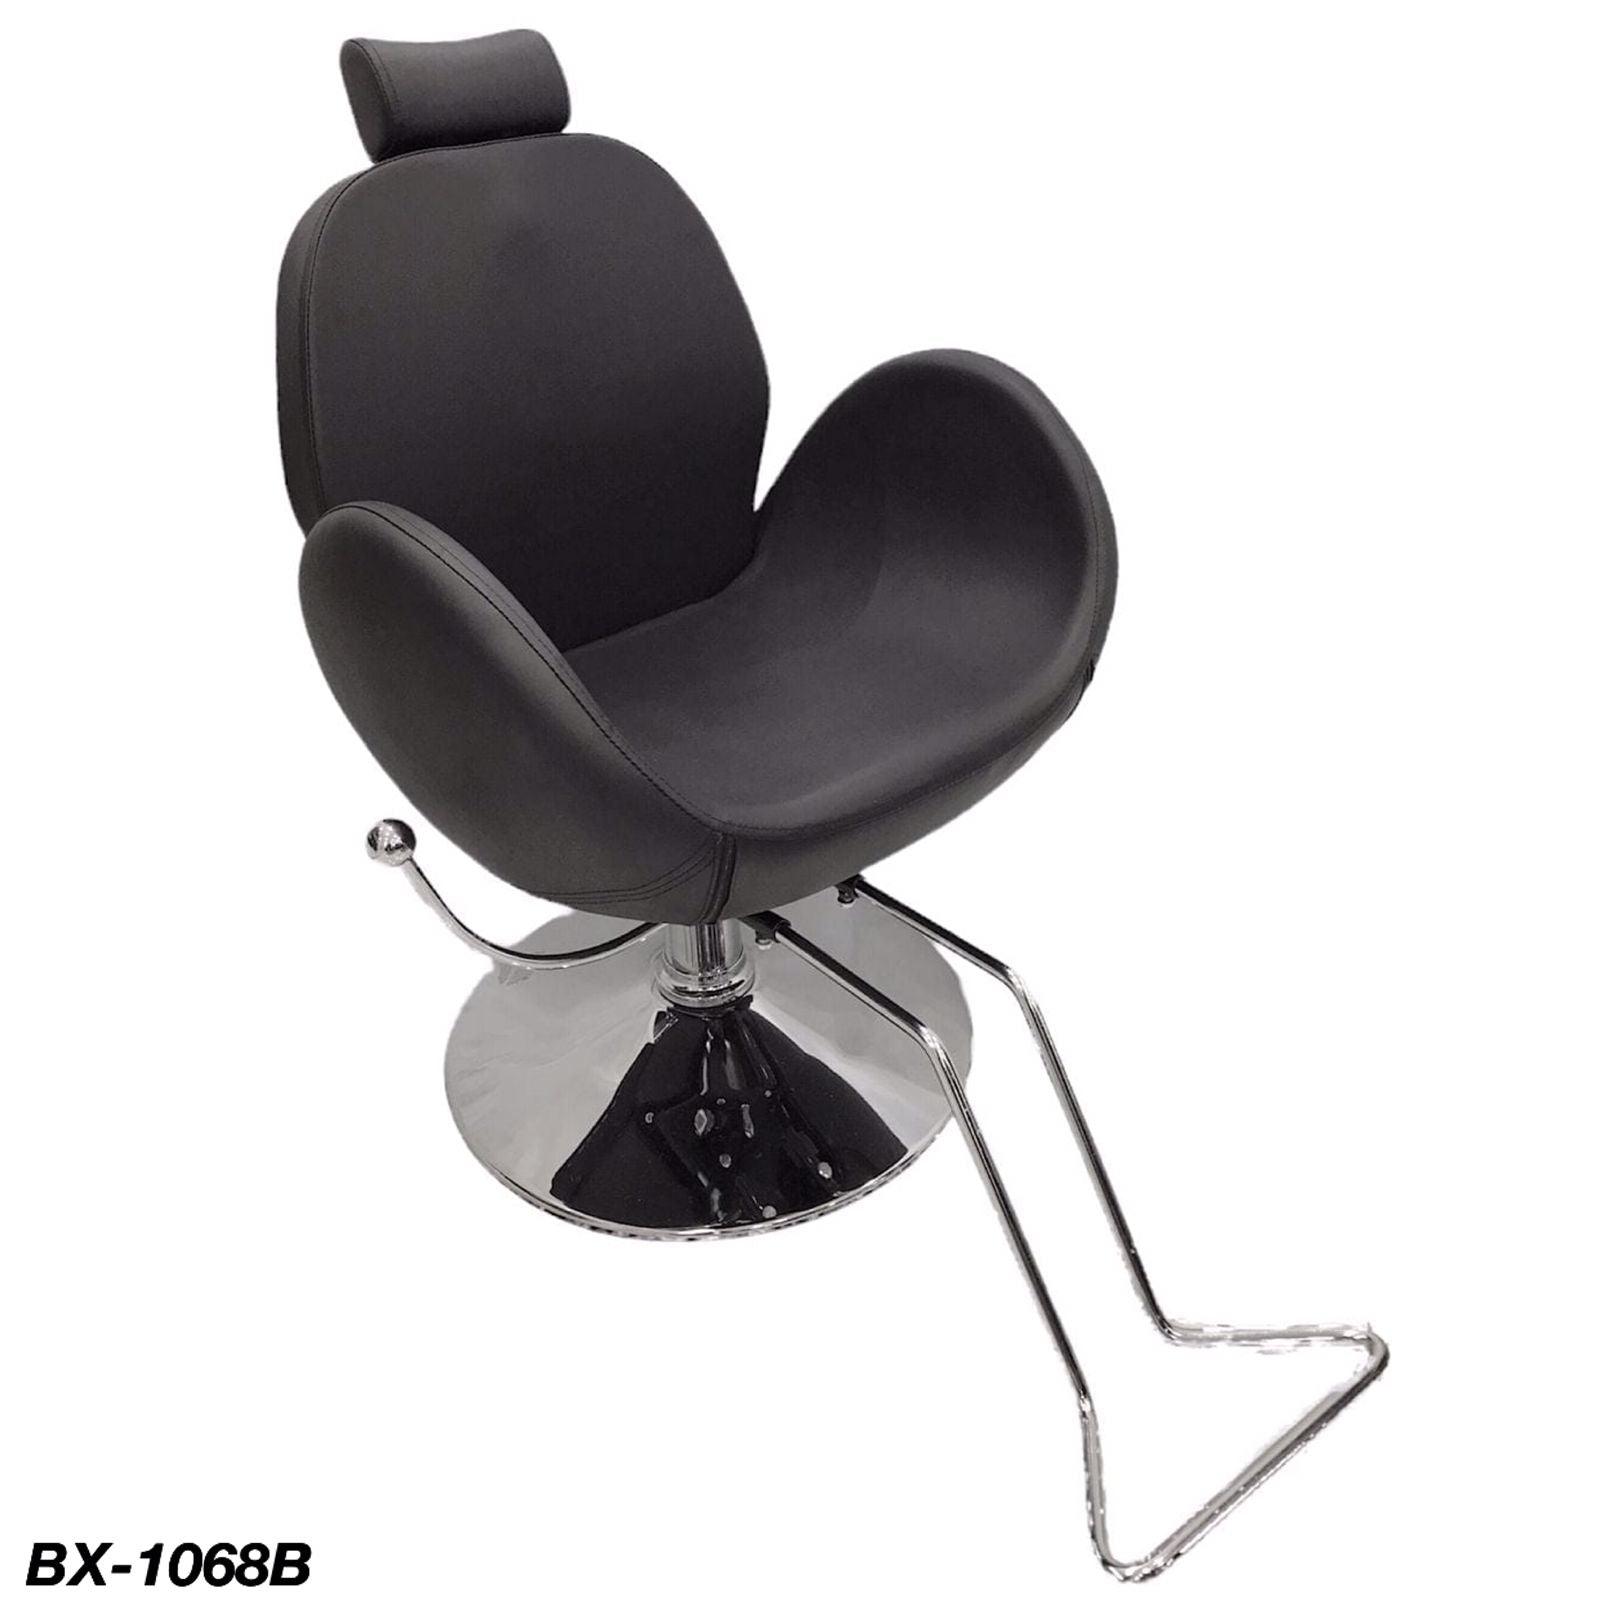 Globalstar Professional Ladies Chair BX-1068B